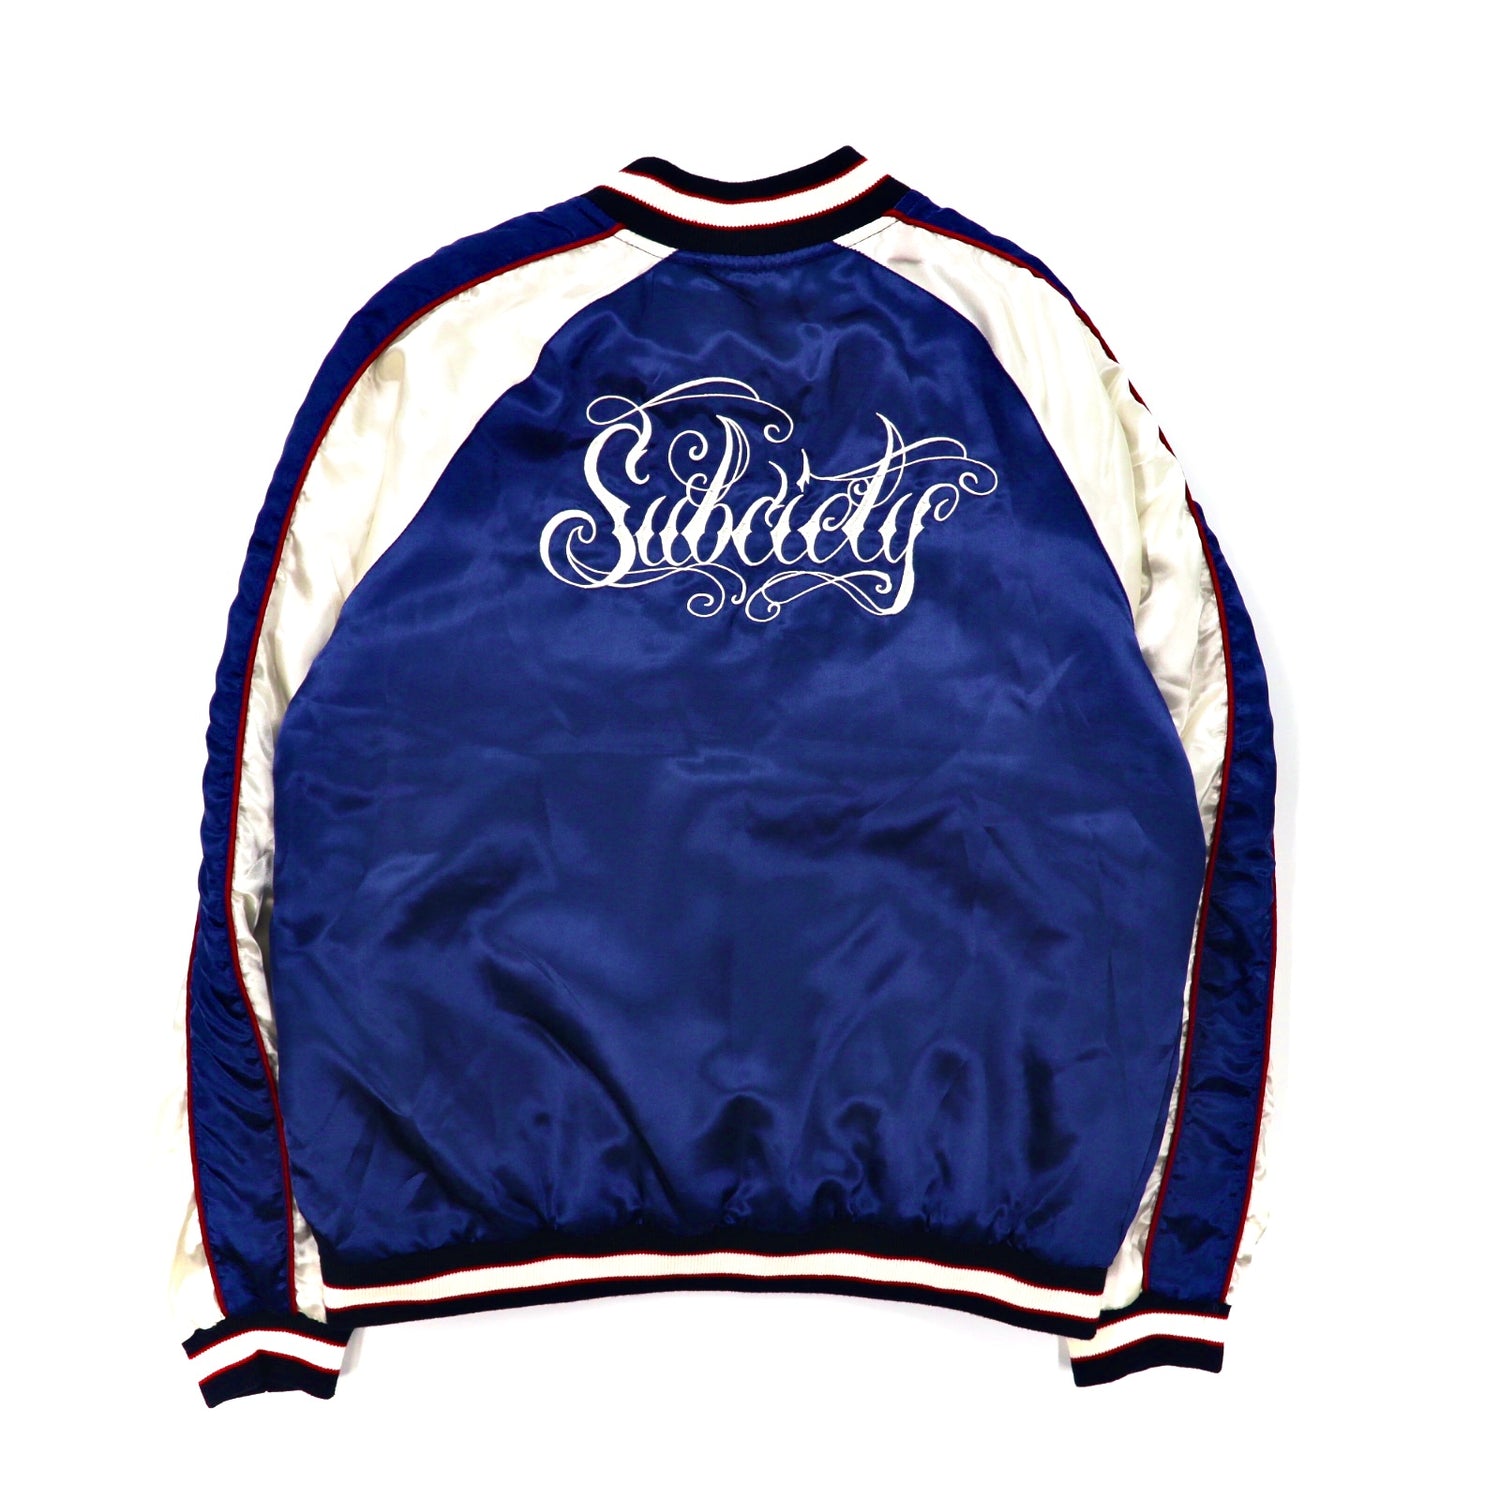 Subciety Souvenir Satin Jacket S Blue Embroidery 60020 Unused 